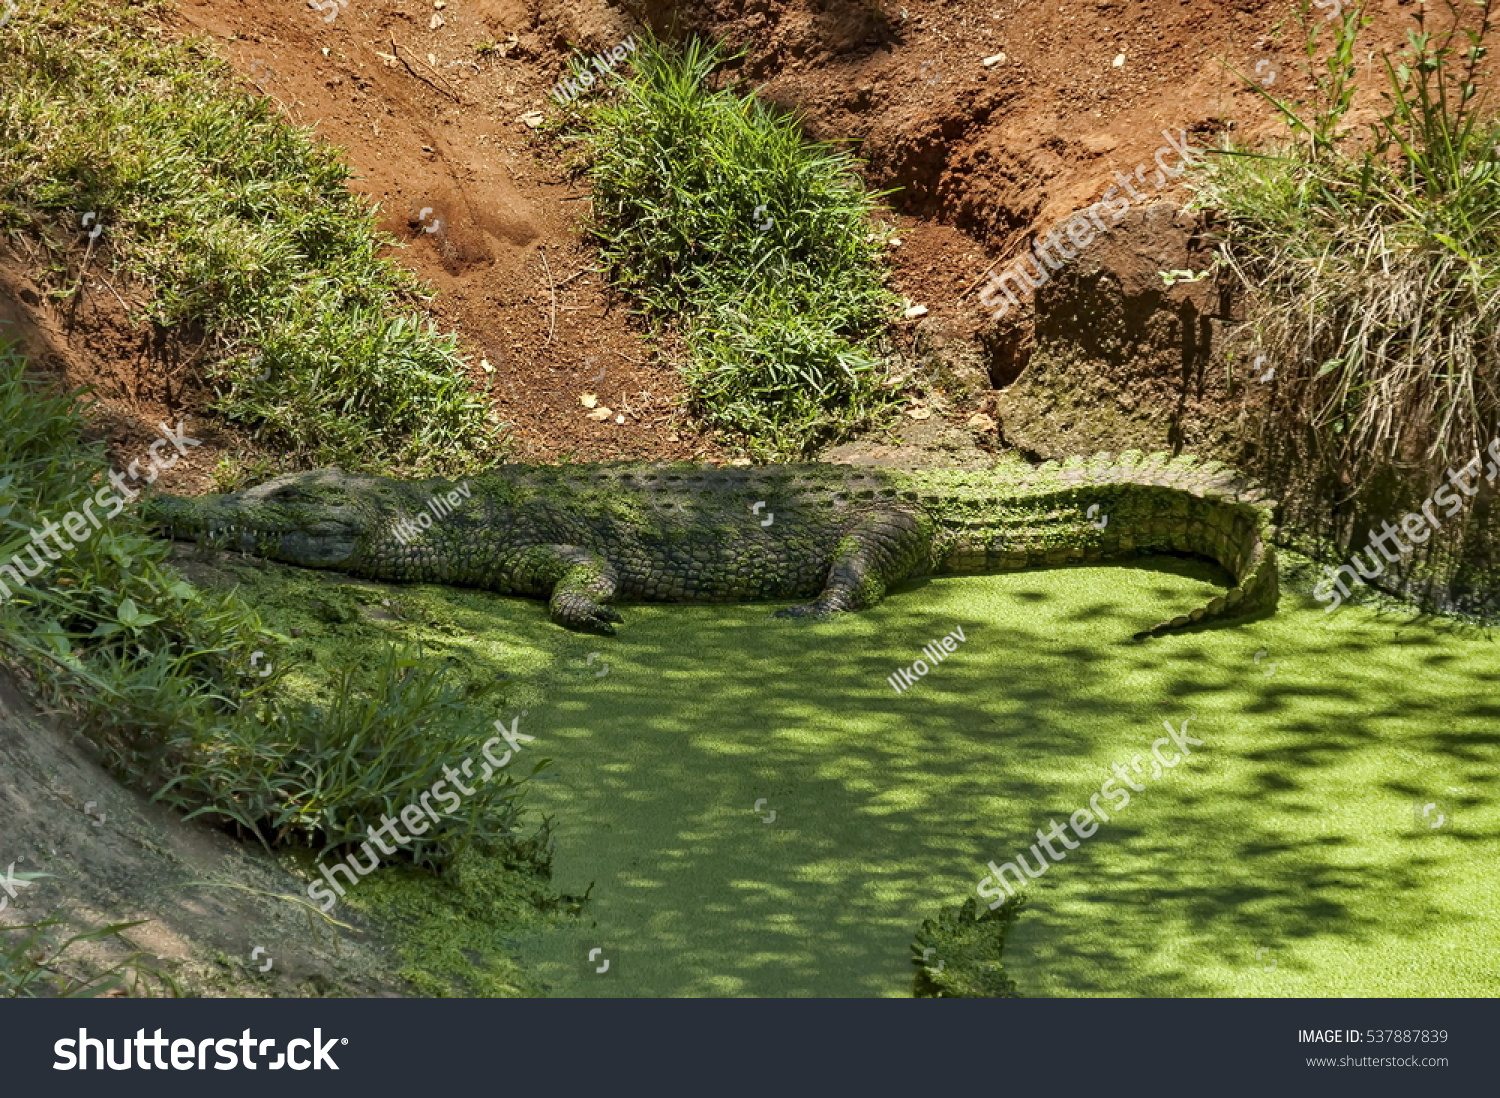 Crocodile Rest Grass Kwena Gardens Sun Stock Photo Edit Now